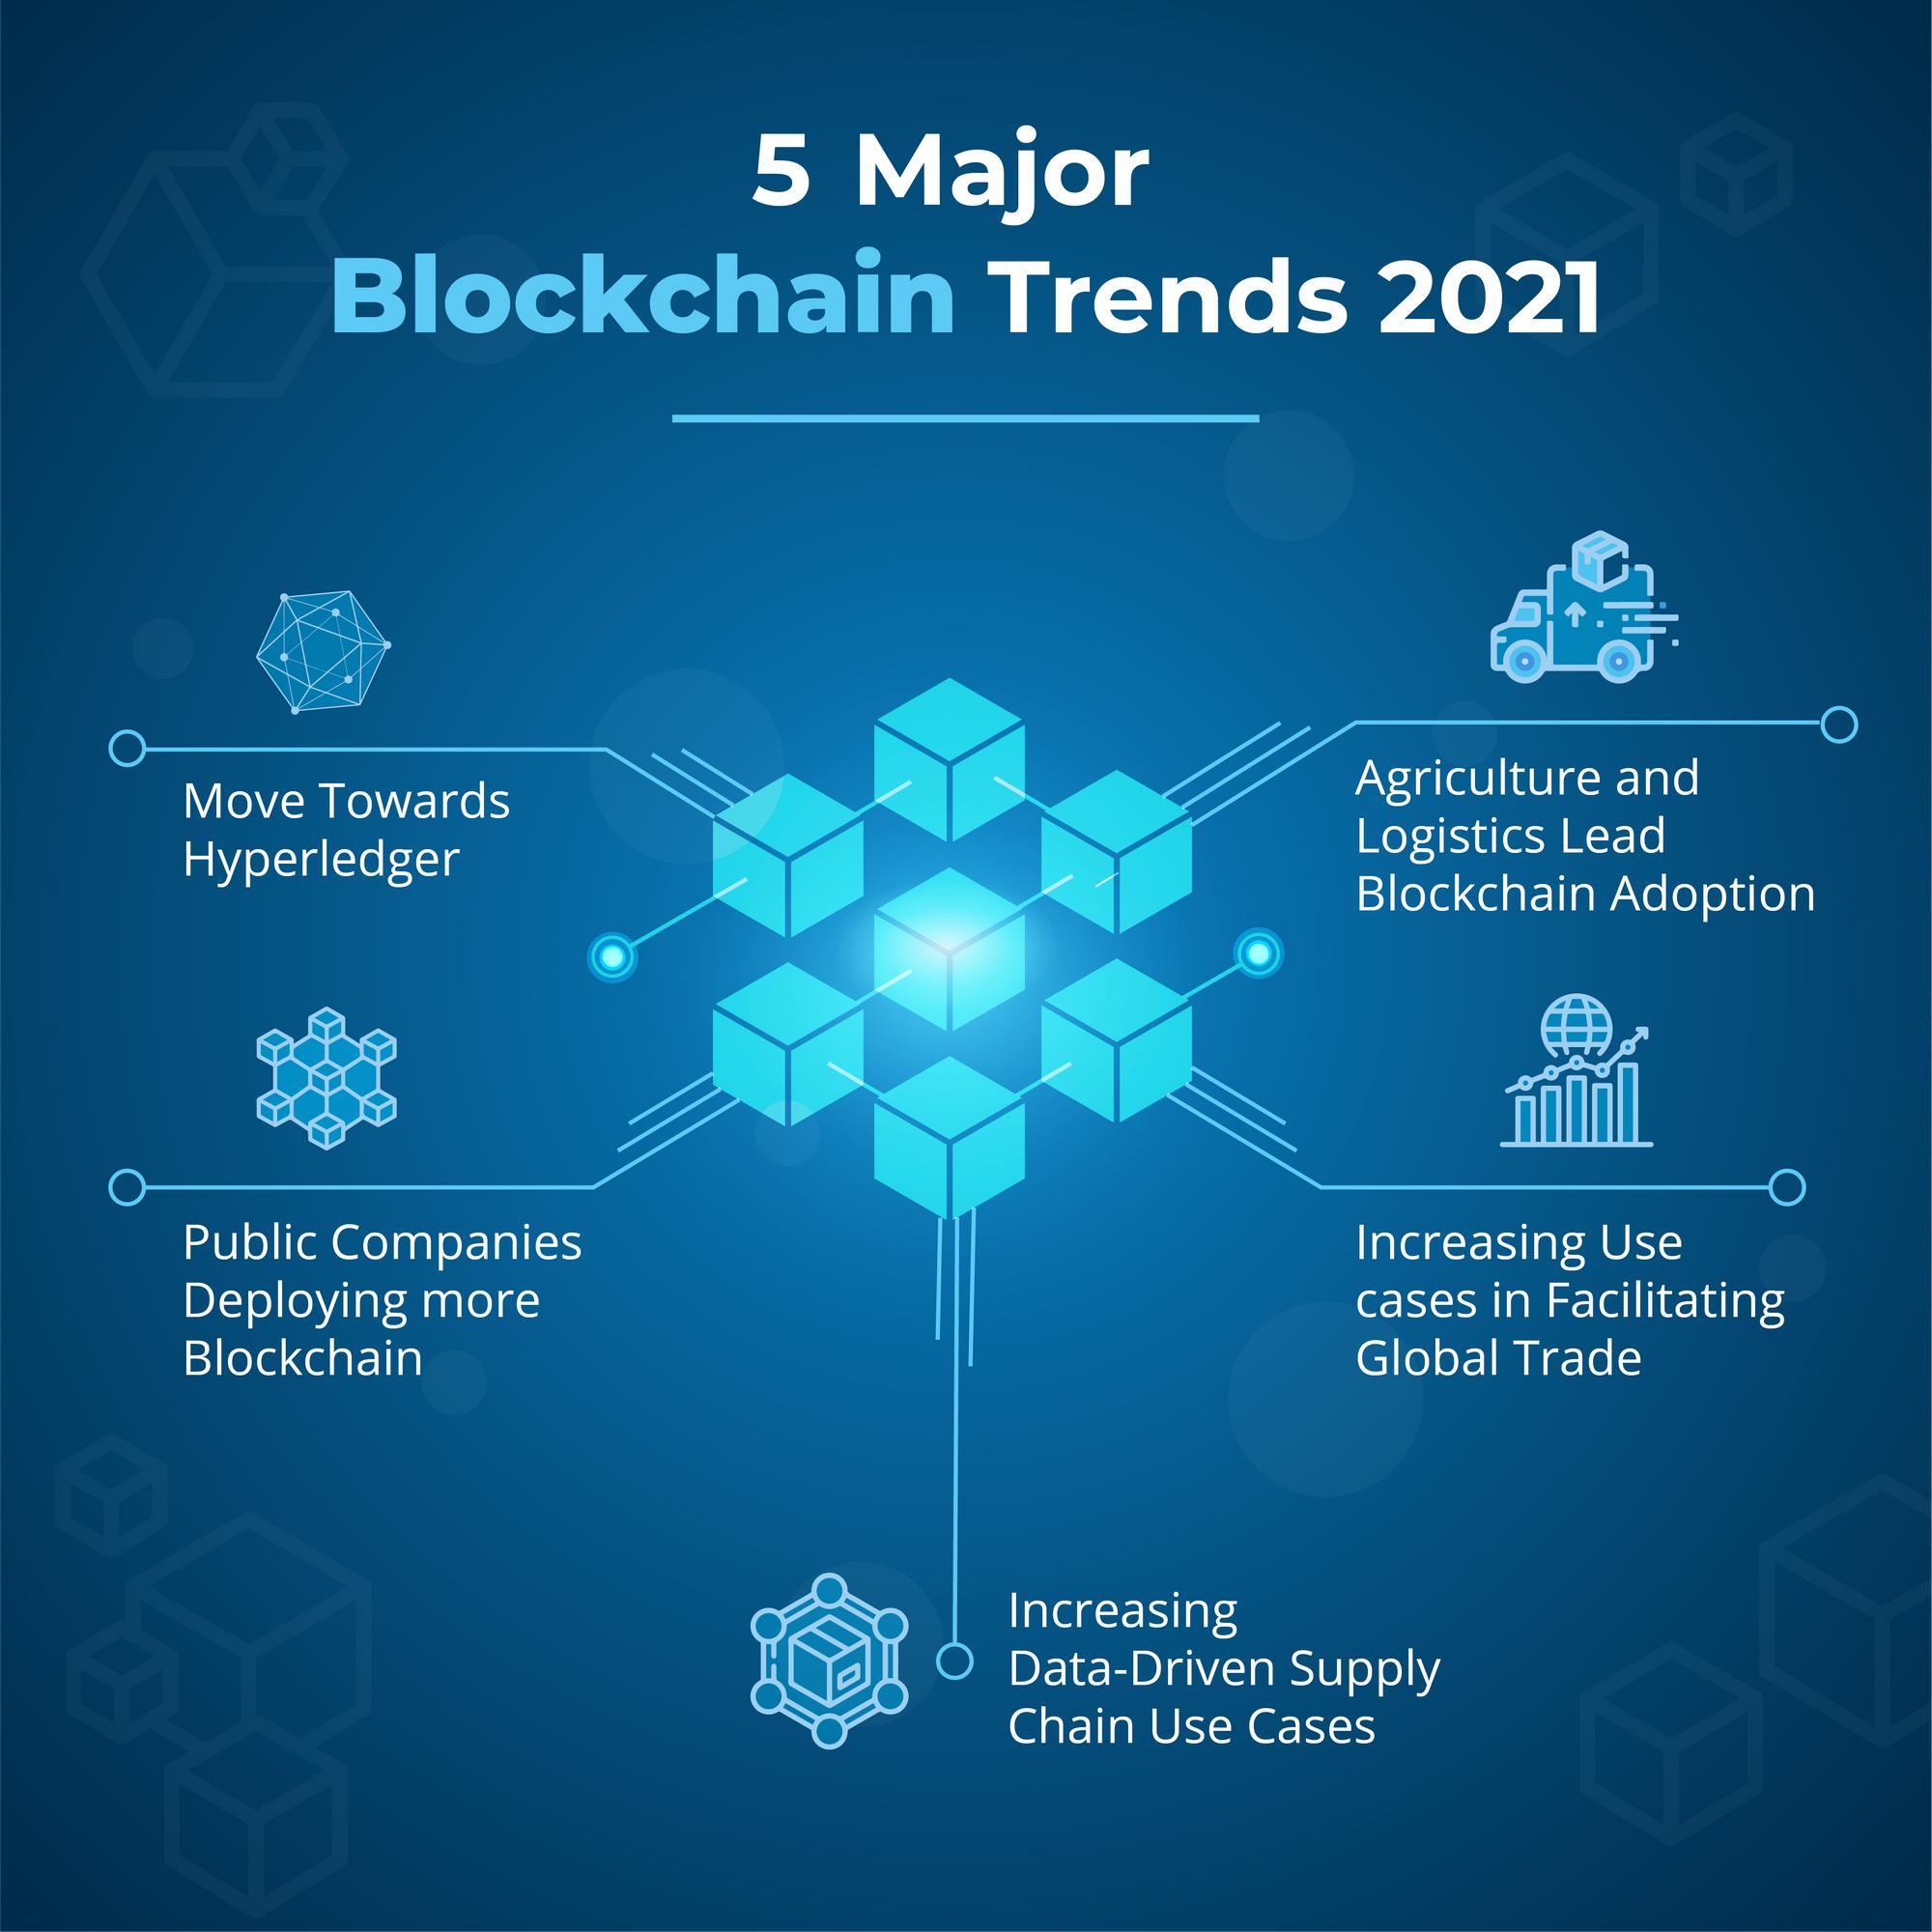 Major Blockchain Trends 2021